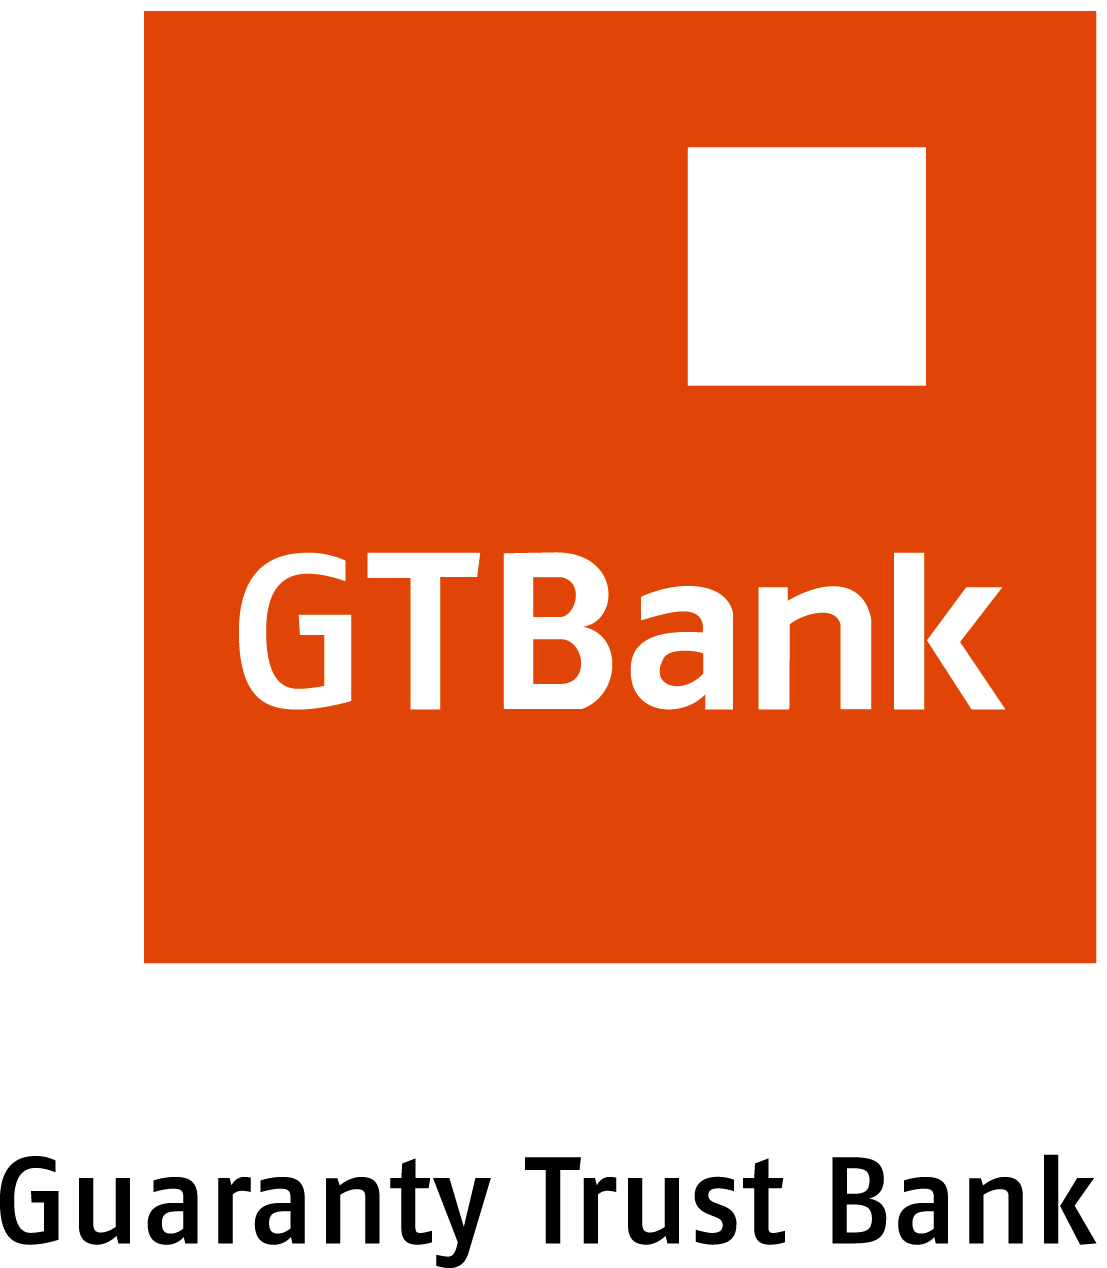 GTbank Logo [Guaranty Trust Bank]